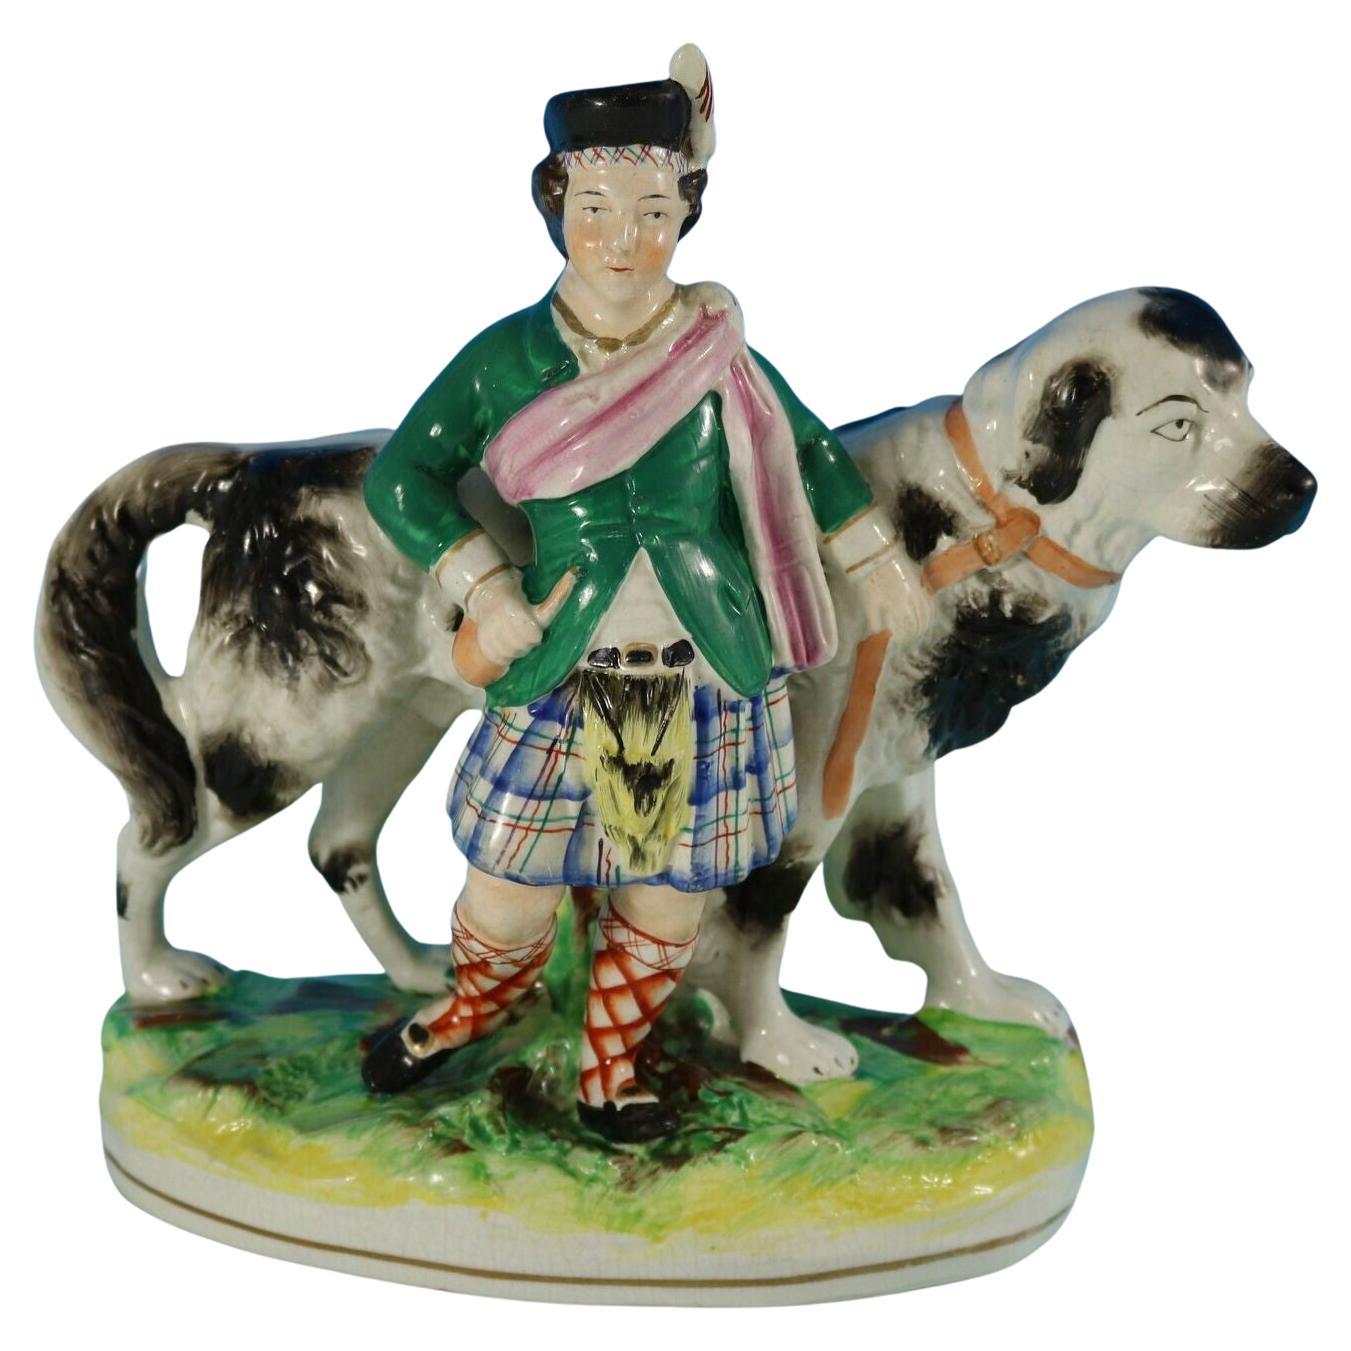 Poterie du Staffordshire garçon avec figurine de Saint Bernard